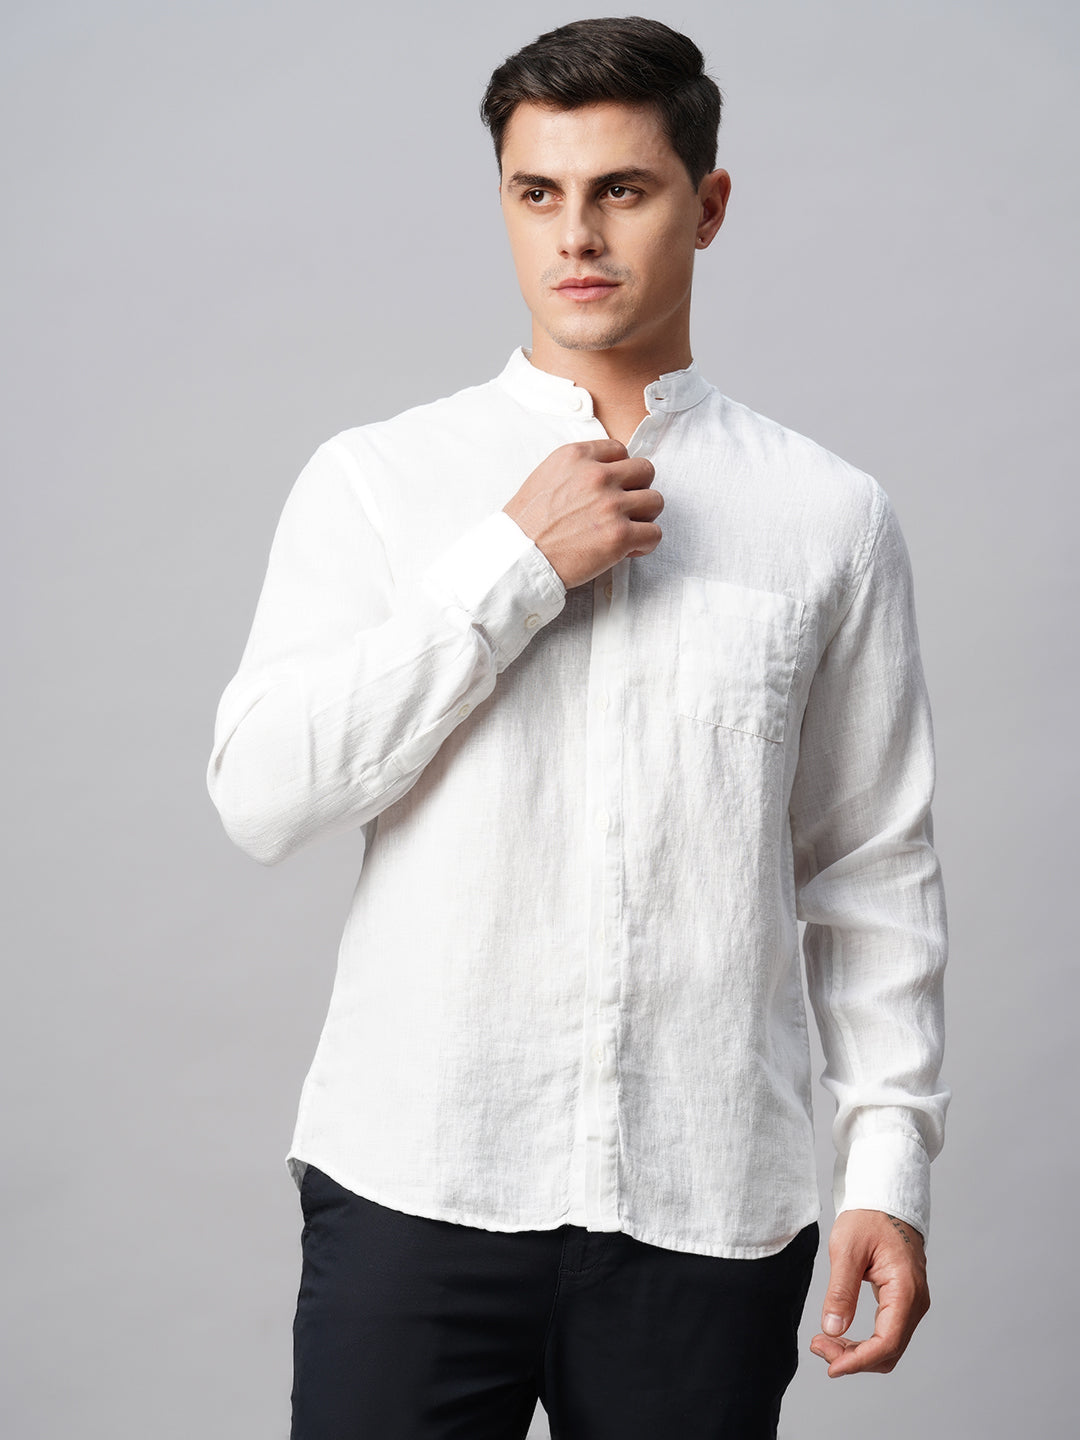 Men's 100% Linen White Band Collared Regular Fit Band Collared Shirt